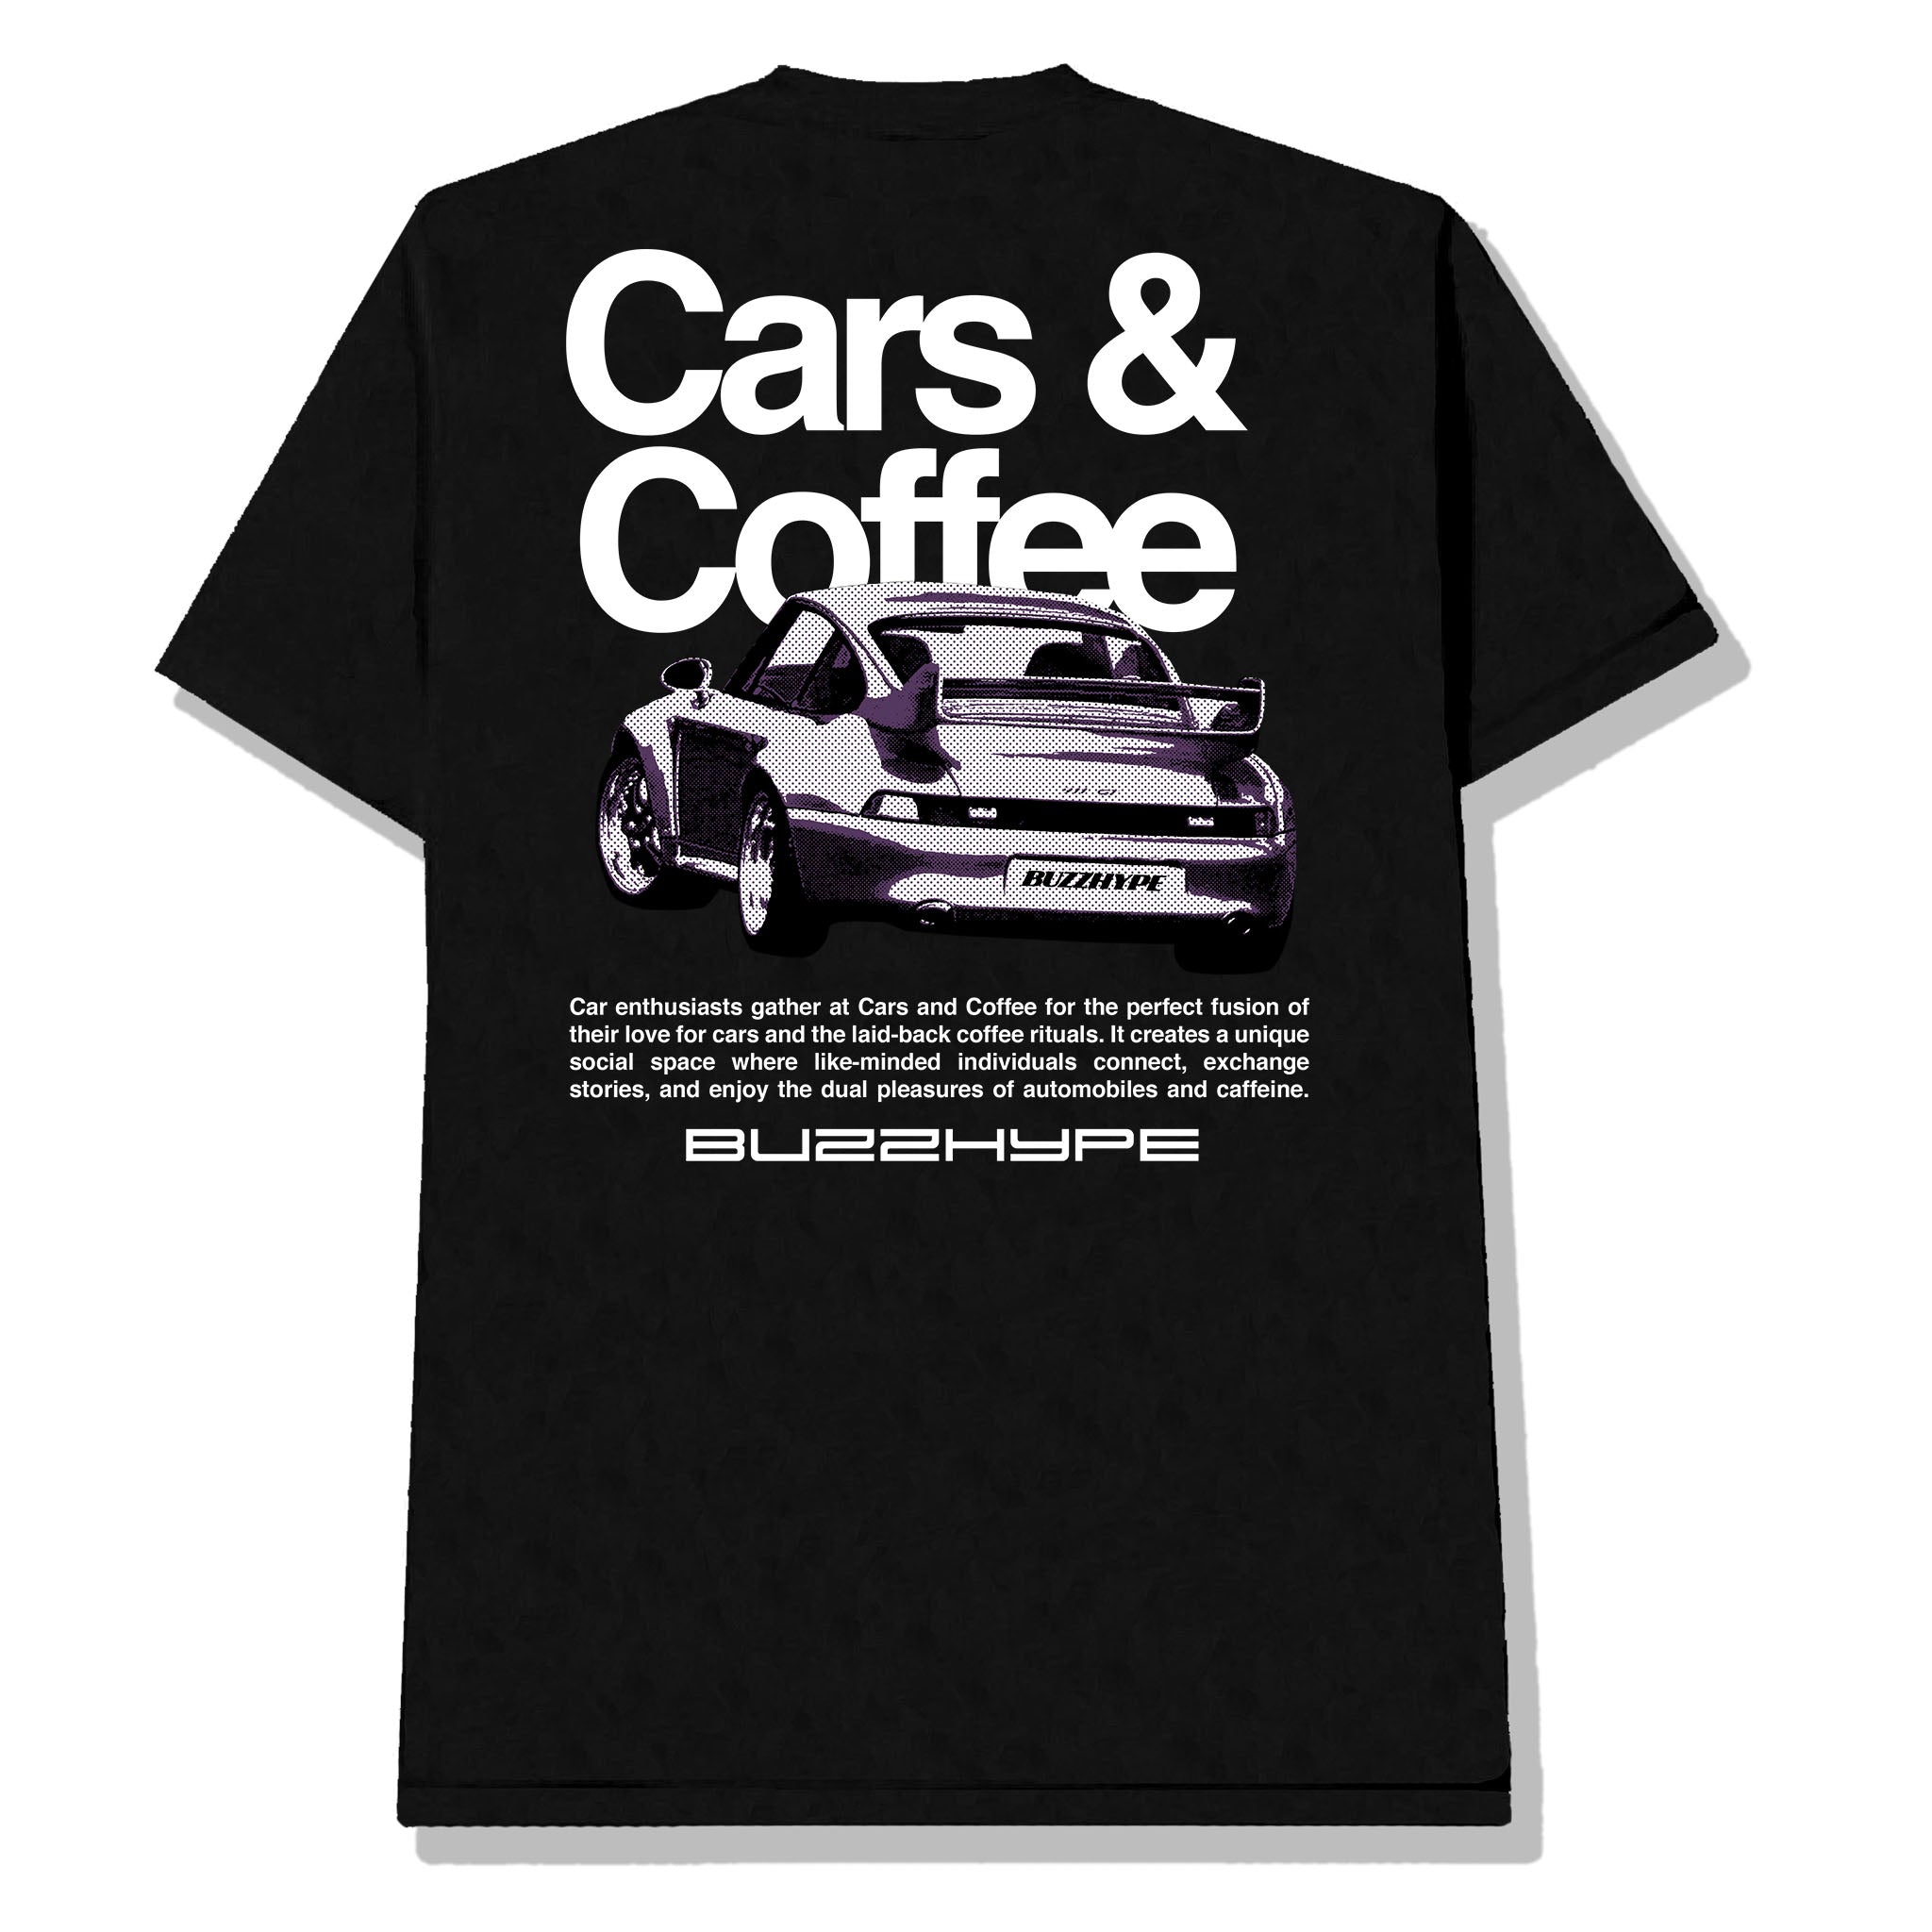 Cars & Coffee in Black Tee